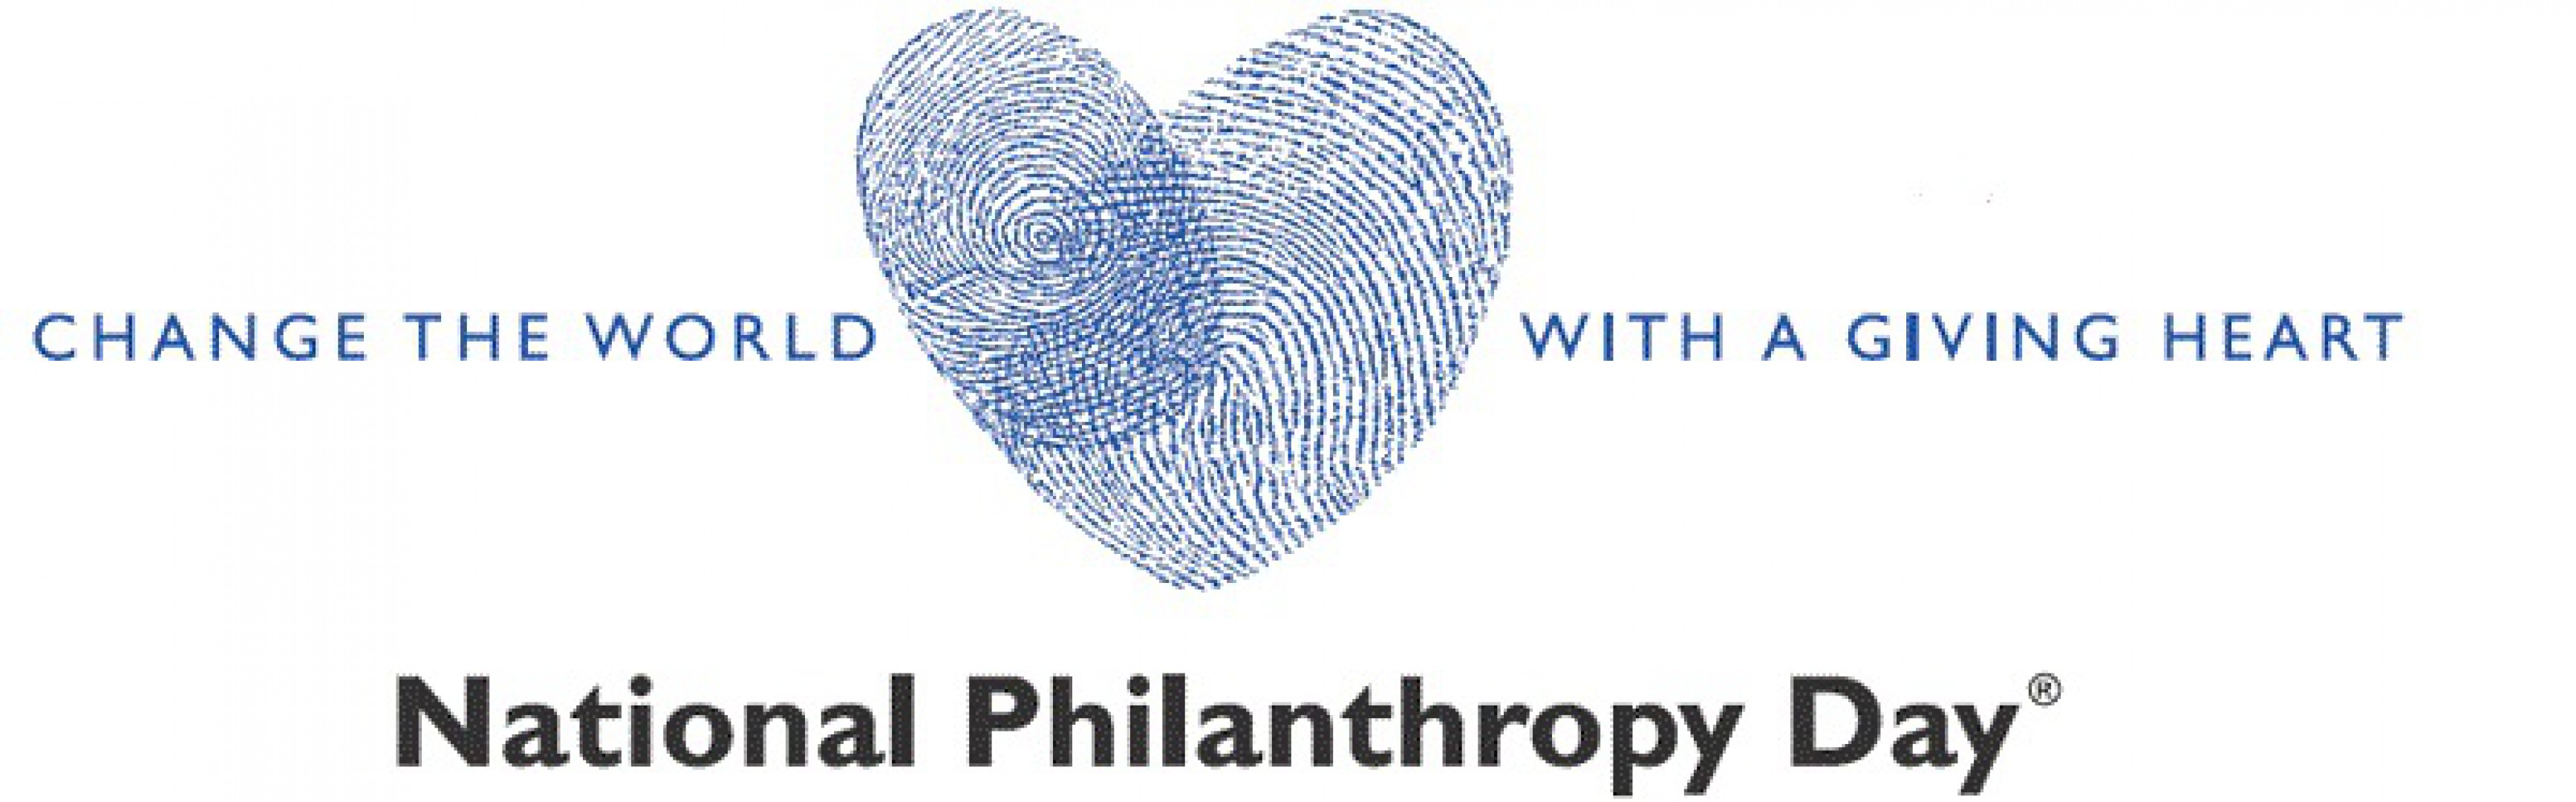 PhilanthropyDay_Sask